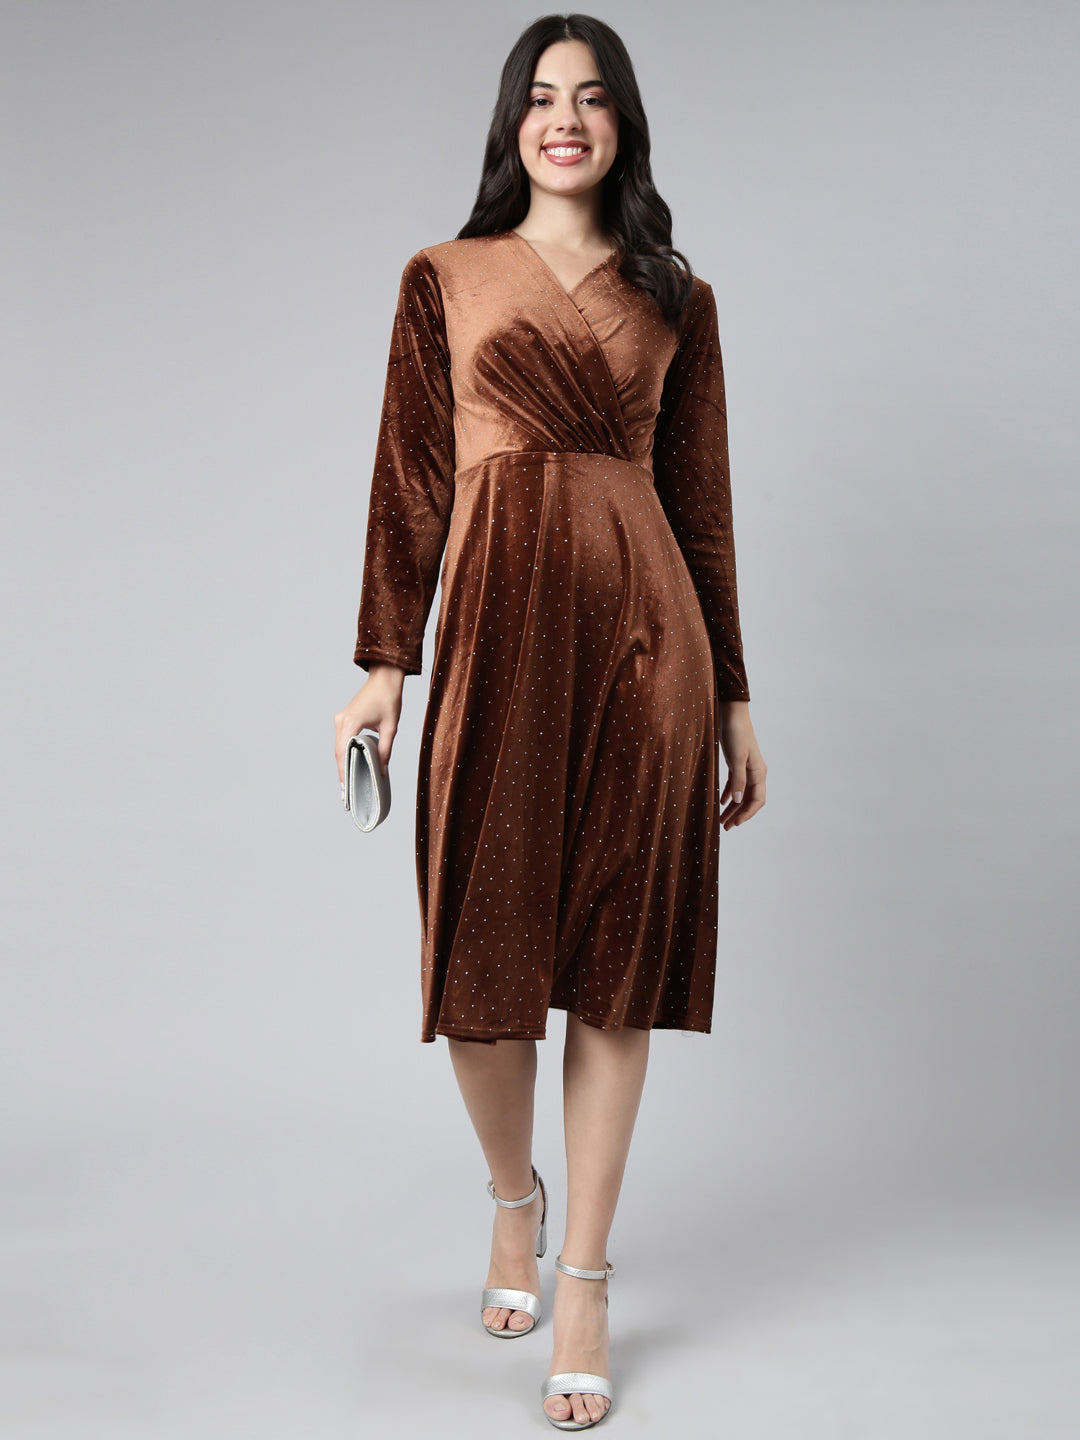 Women Embellished Brown A-Line Dress